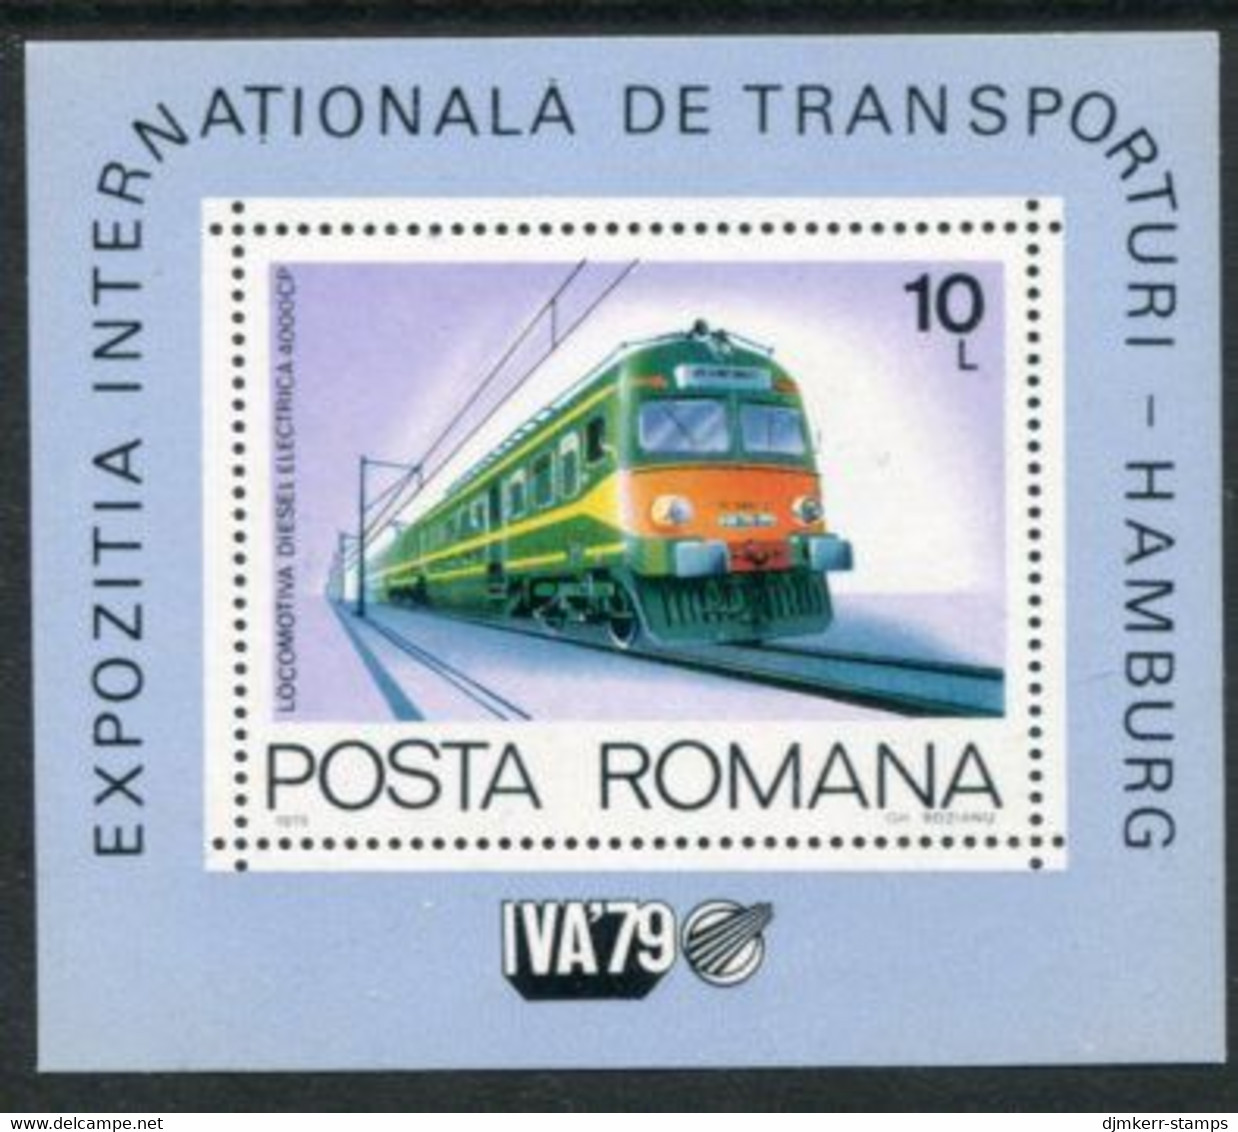 ROMANIA 1979 Transport Exhibition Block MNH / **.  Michel Block 166 - Blocs-feuillets